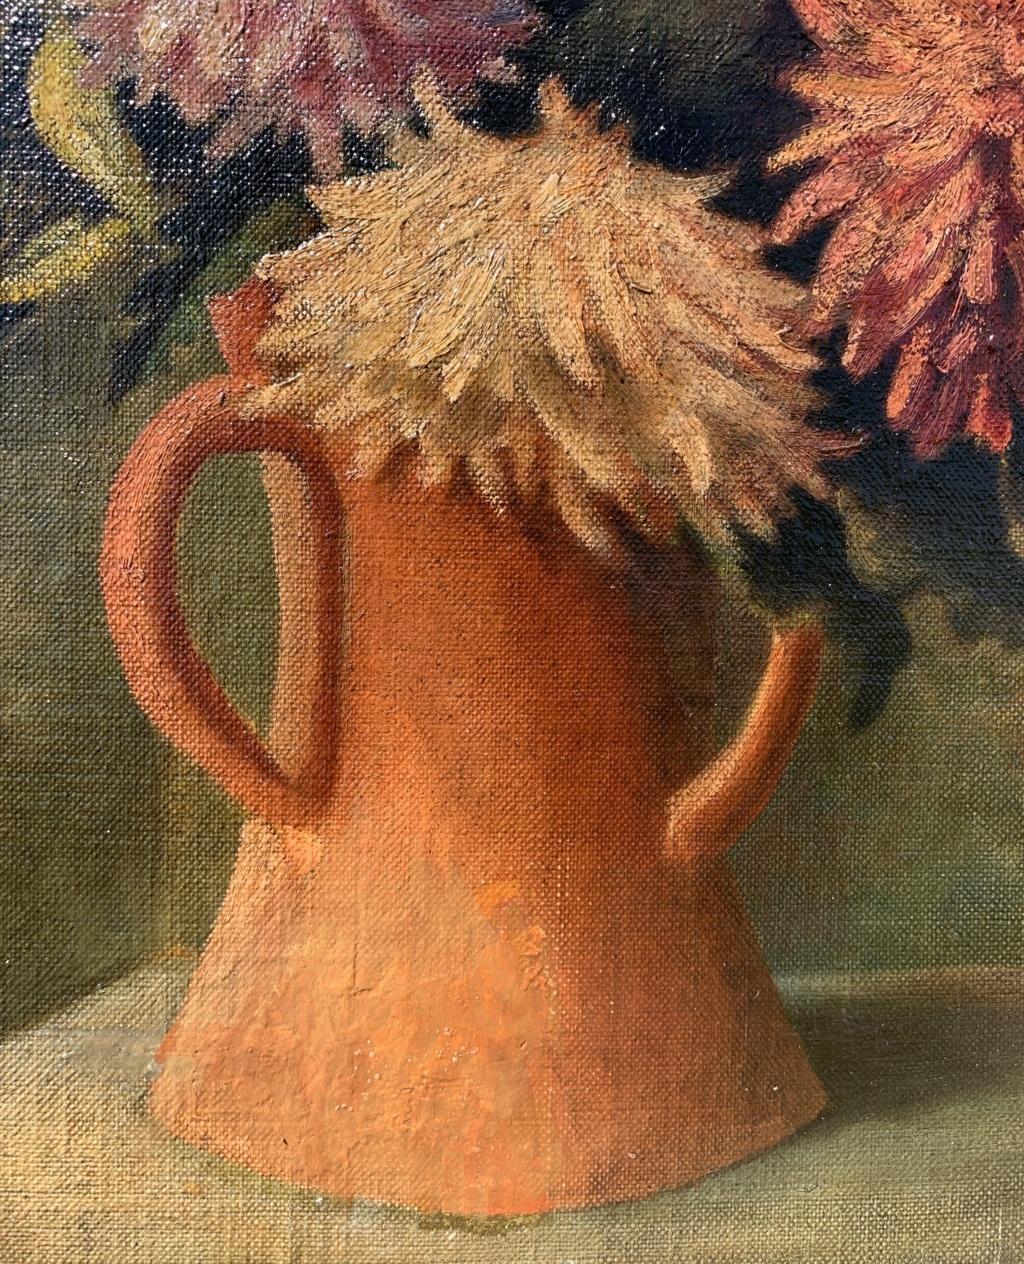 Still Life painter (British school) - 20th century painting - Interior flower  For Sale 1